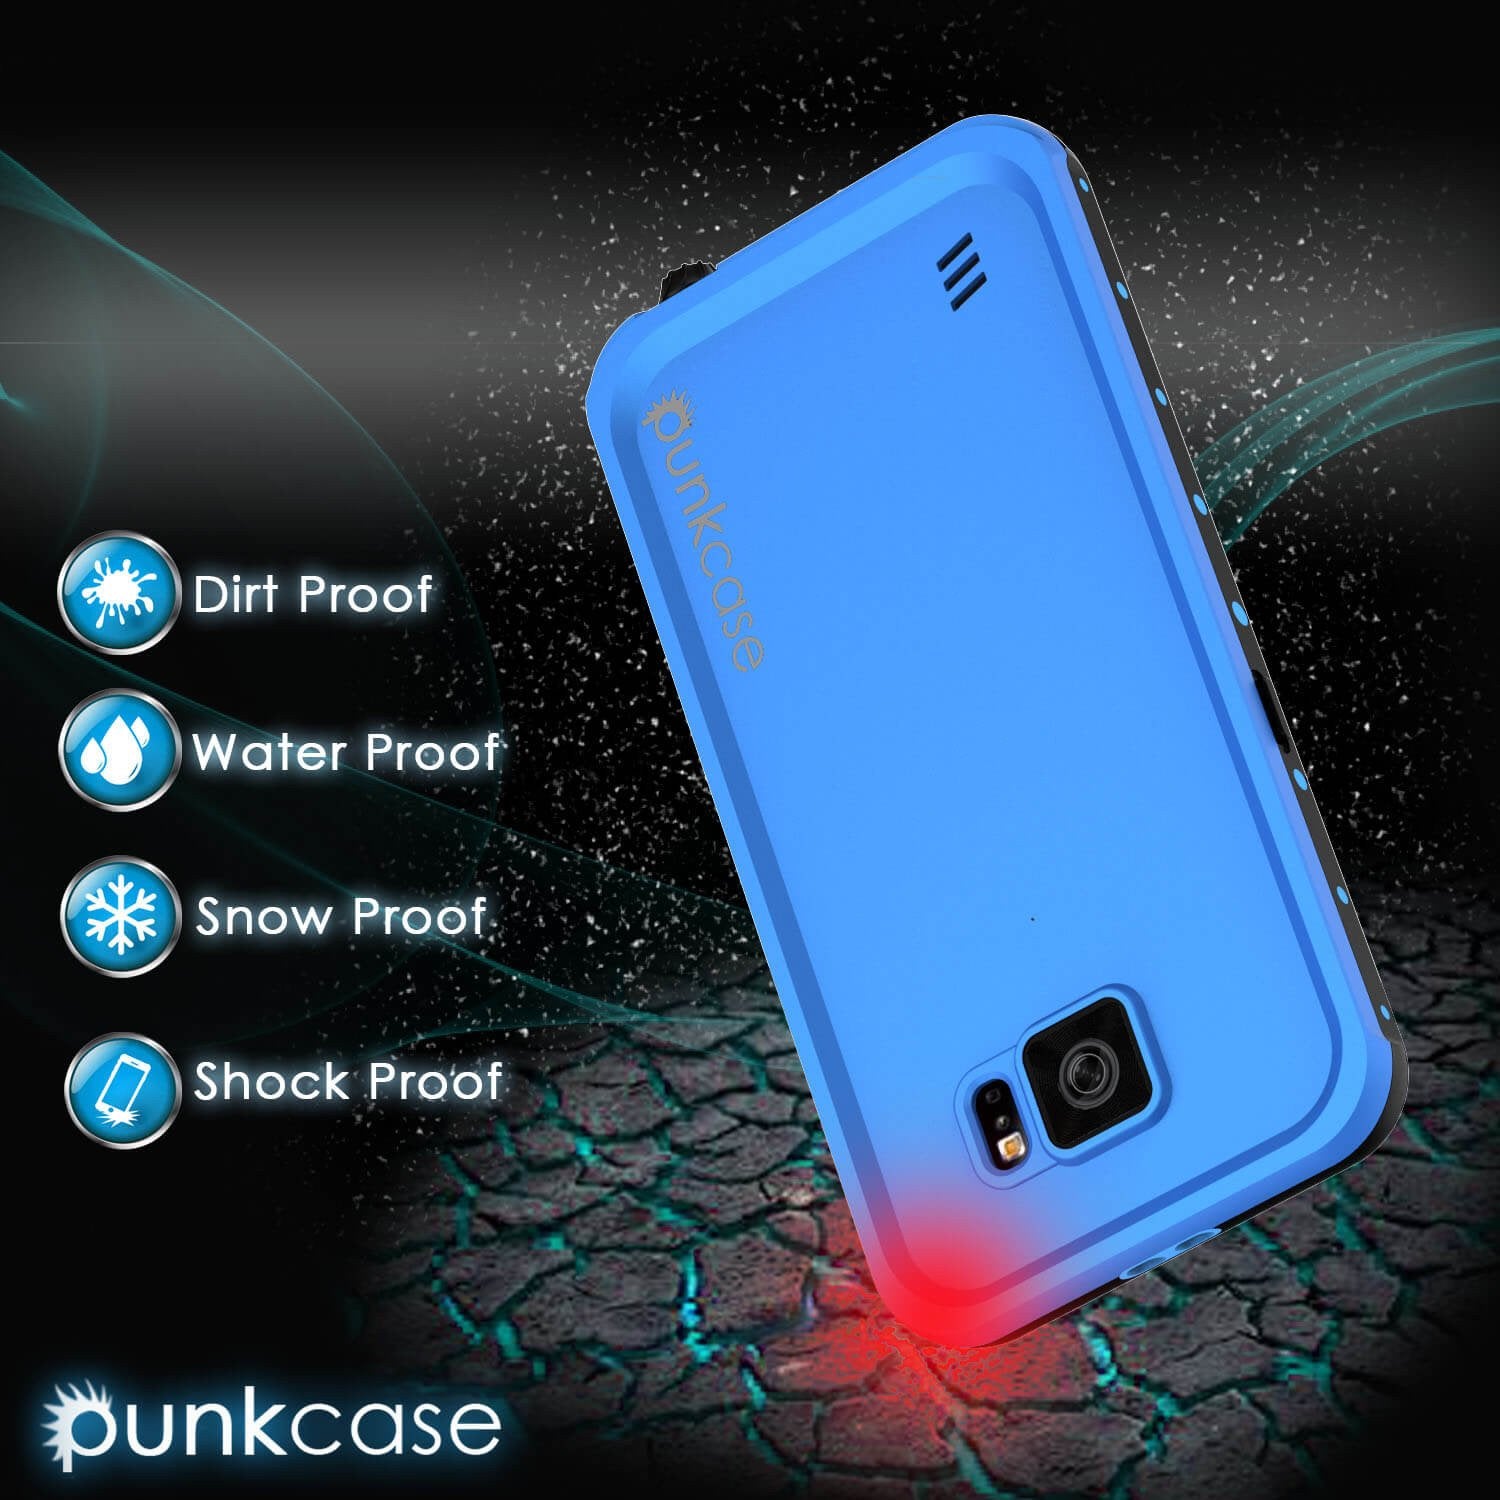 Galaxy S6 Waterproof Case PunkCase StudStar Light Blue Thin 6.6ft Underwater IP68 Shock/Dirt Proof